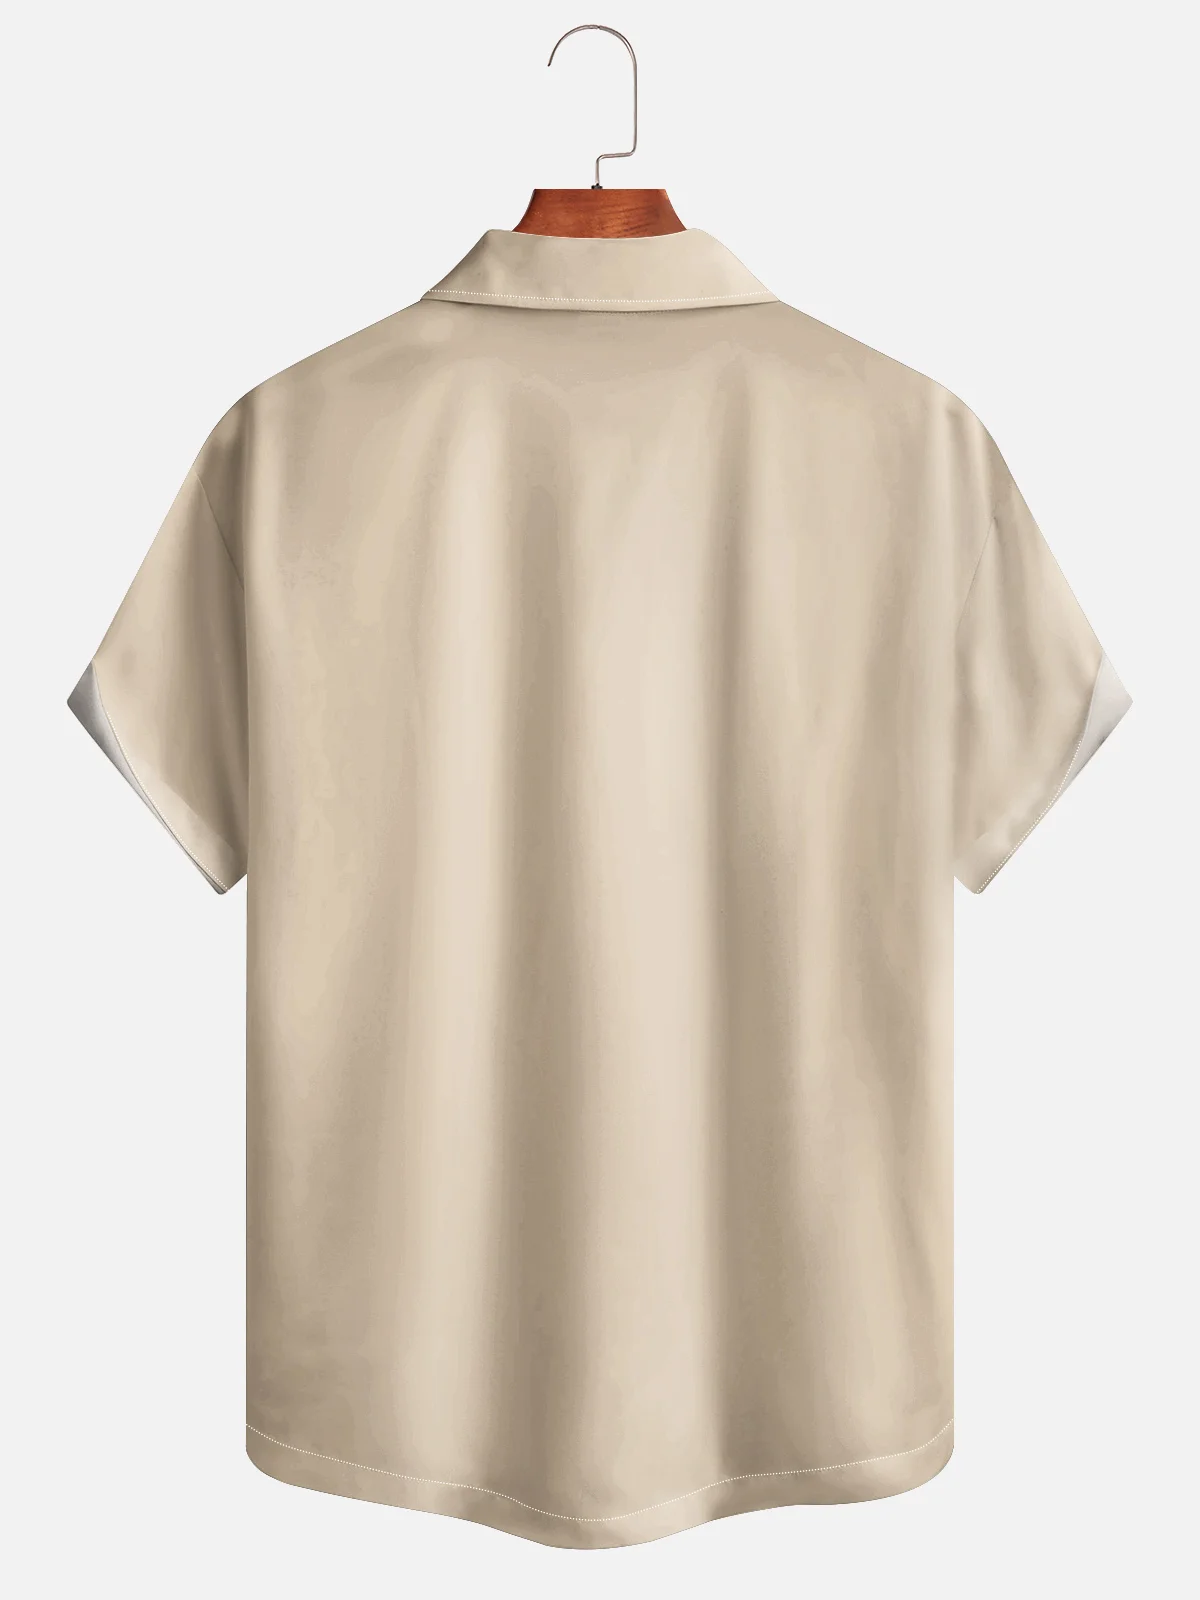 Moisture-wicking Mid-century Geometric Bowling Shirt